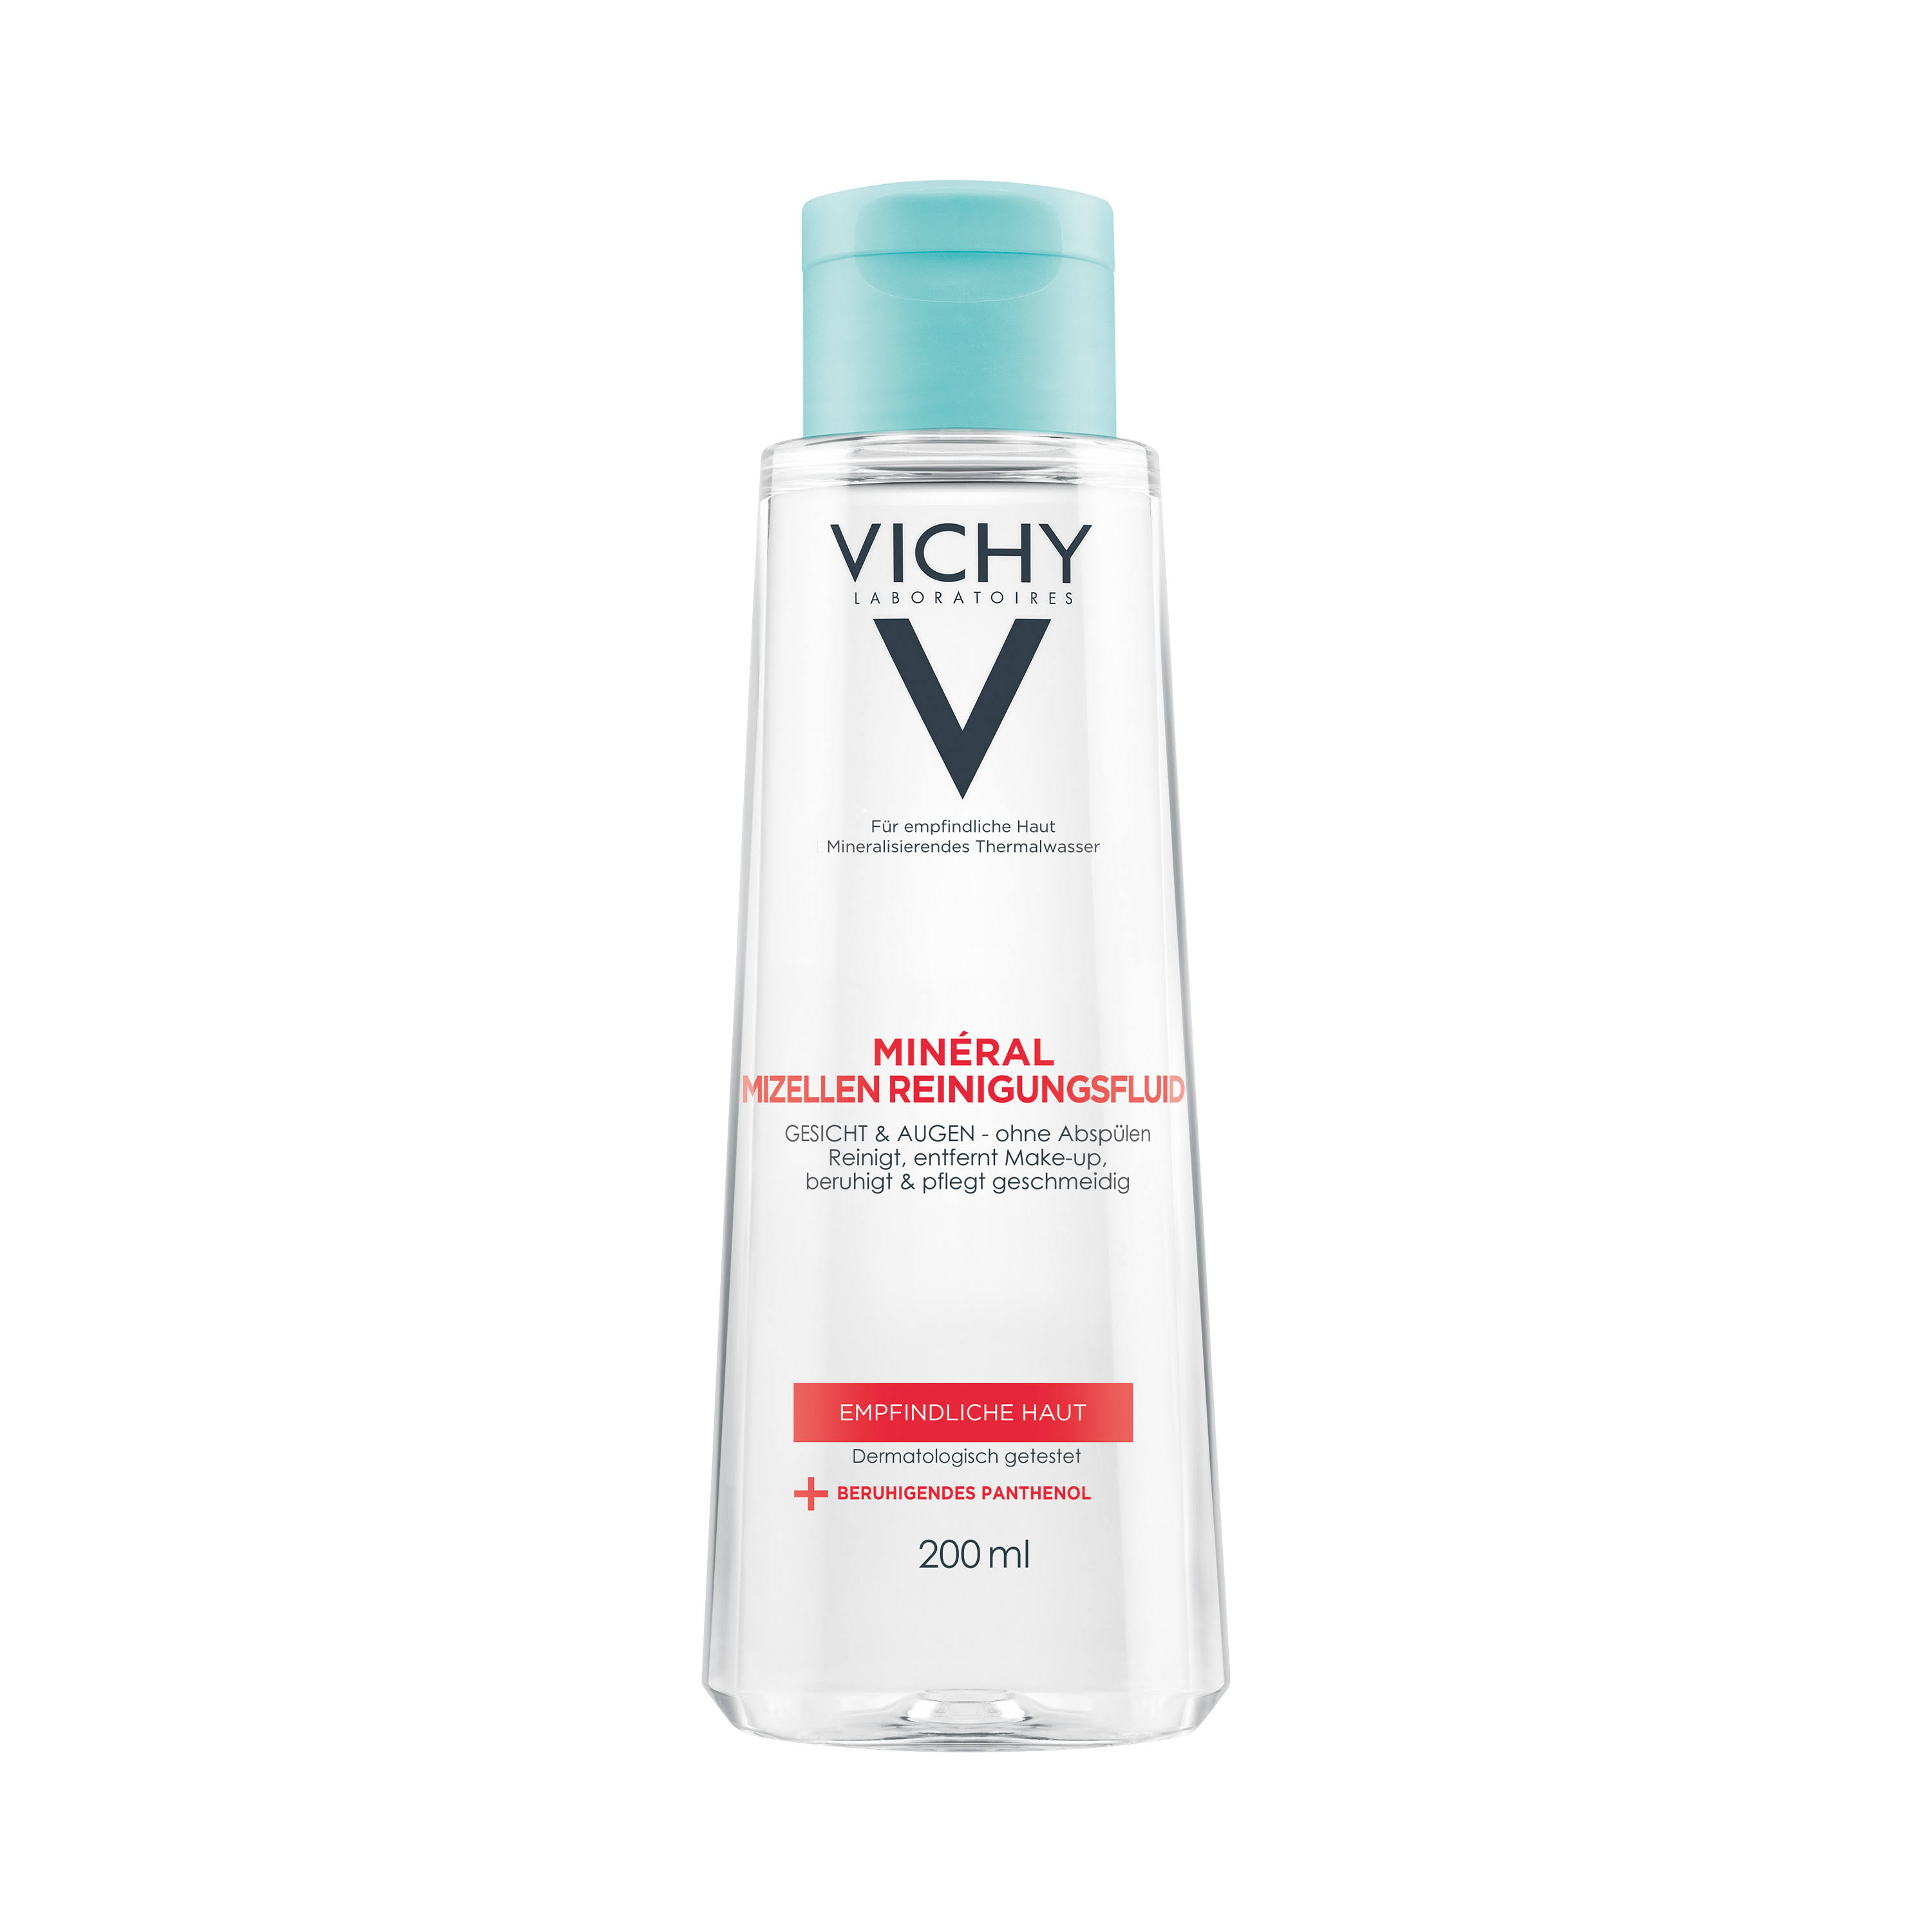 Vichy - Pureté Thermale Mineral Micellar Water Sensitive Skin 200ml